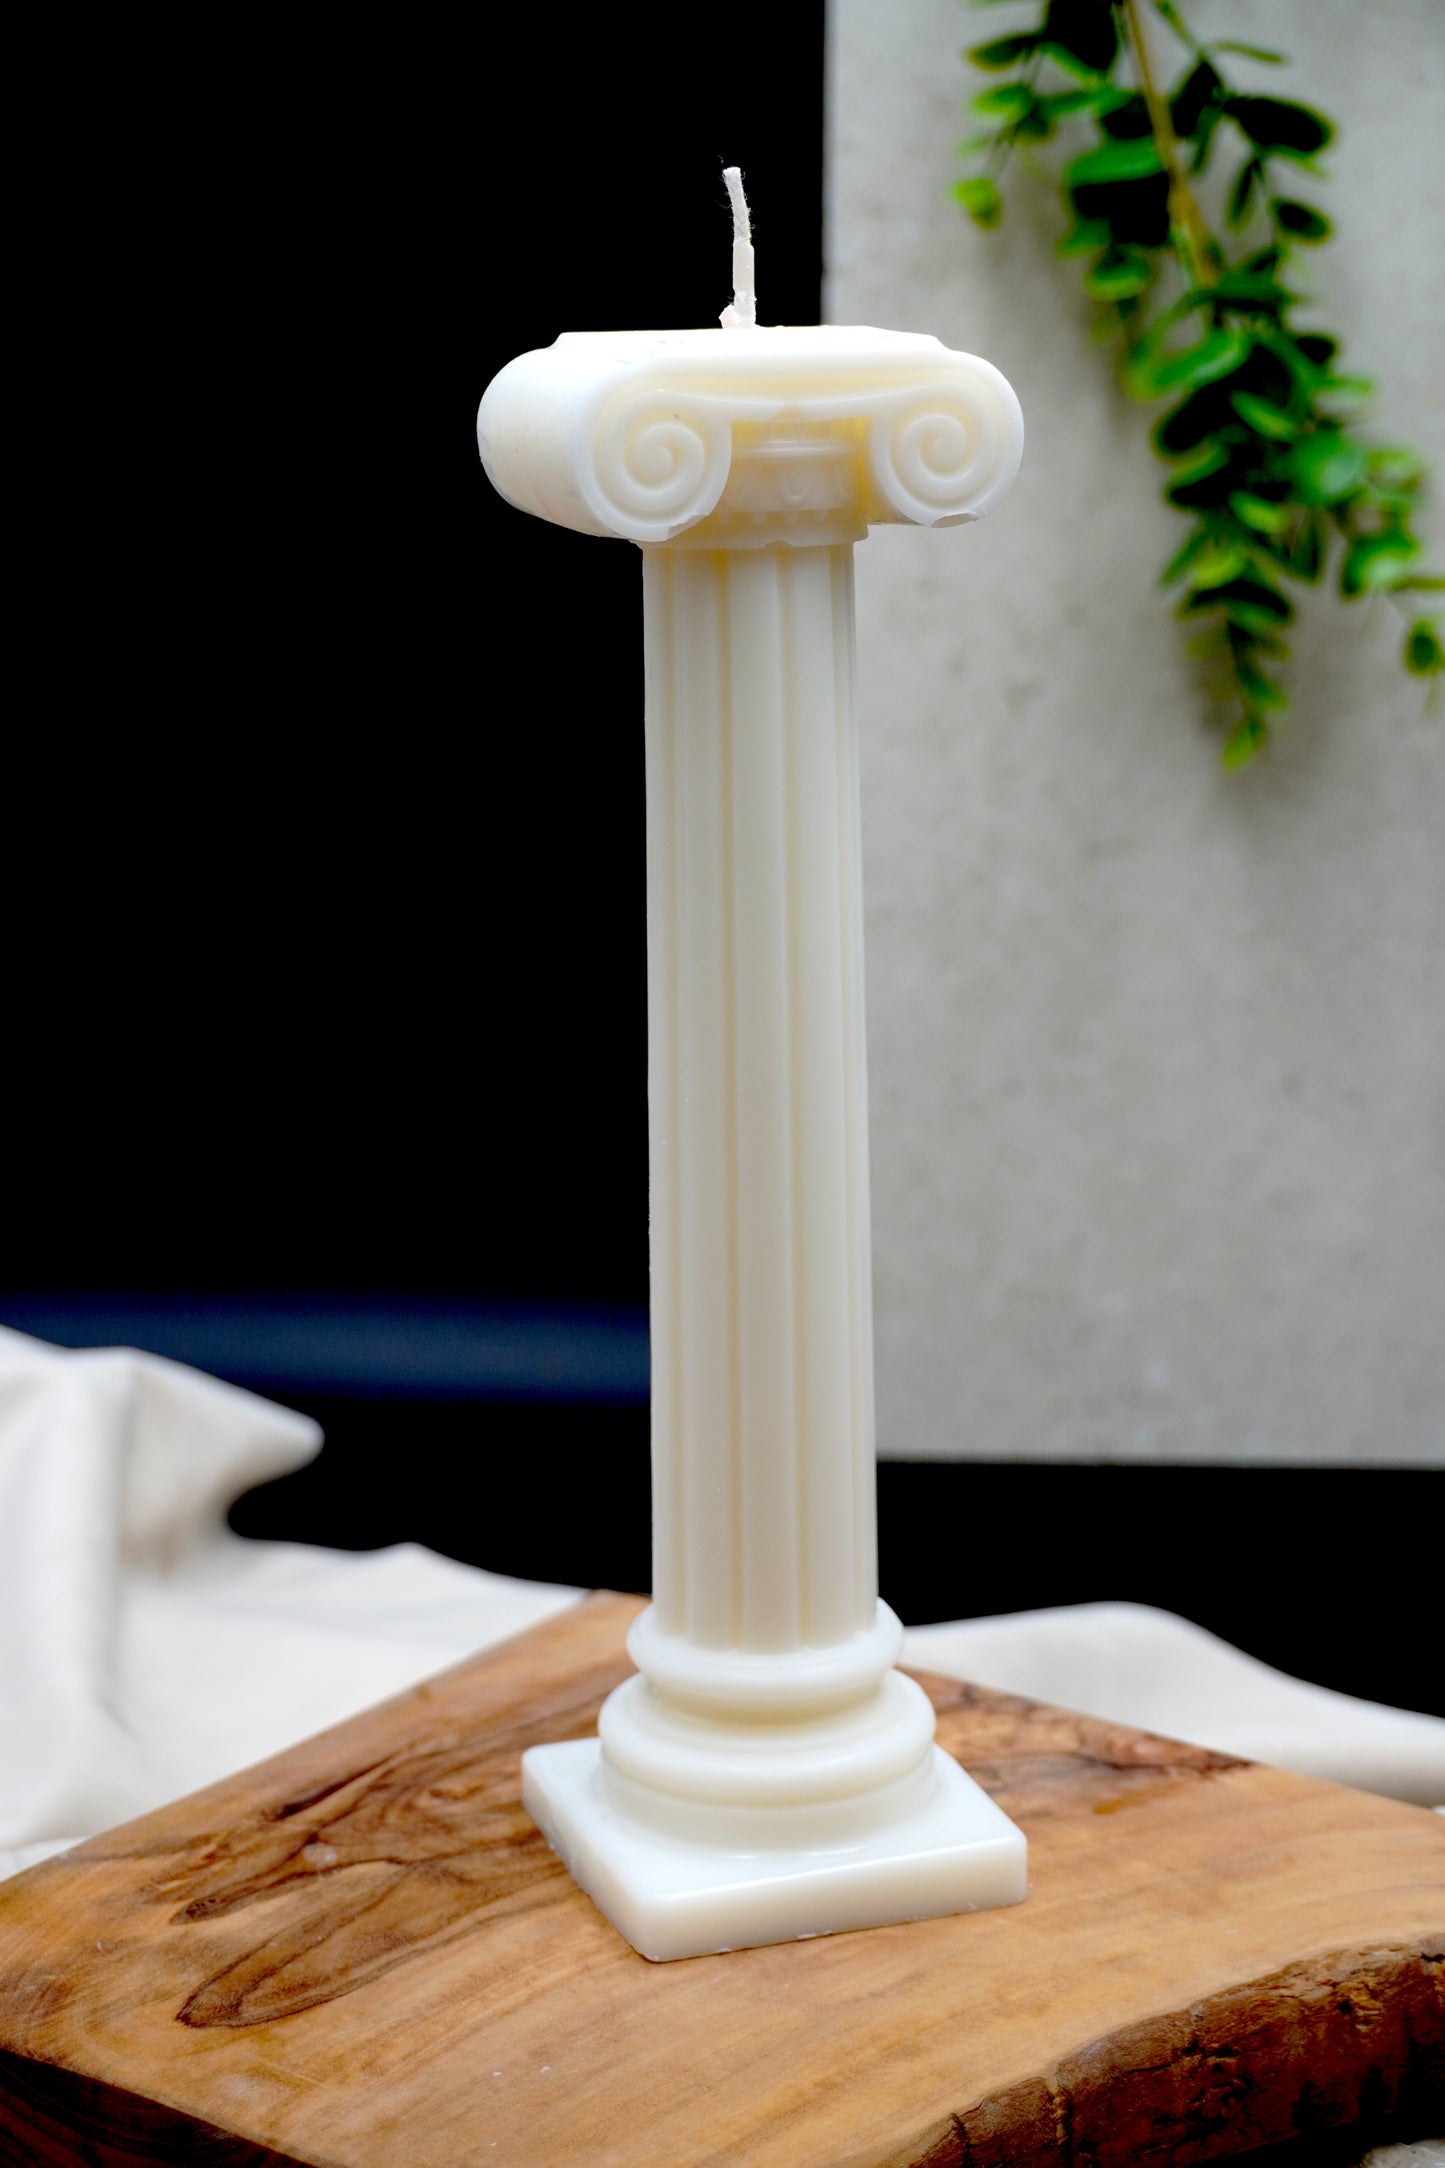 Large column Candle